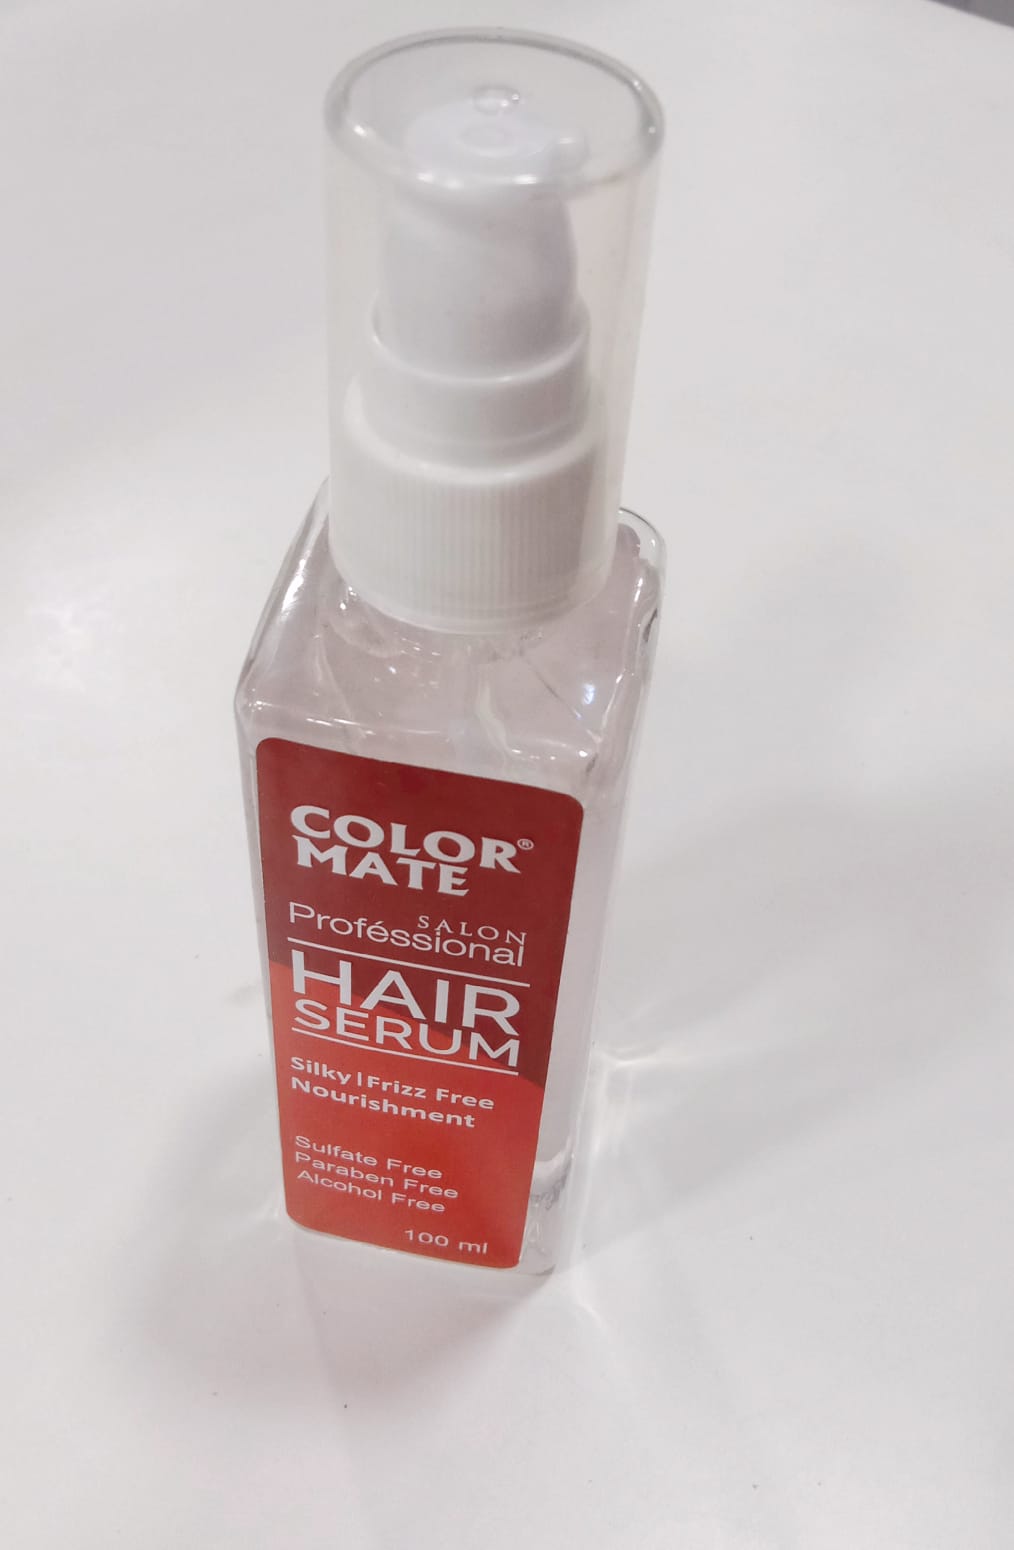 Color Mate Salon Professional hair serum, 100ML – 